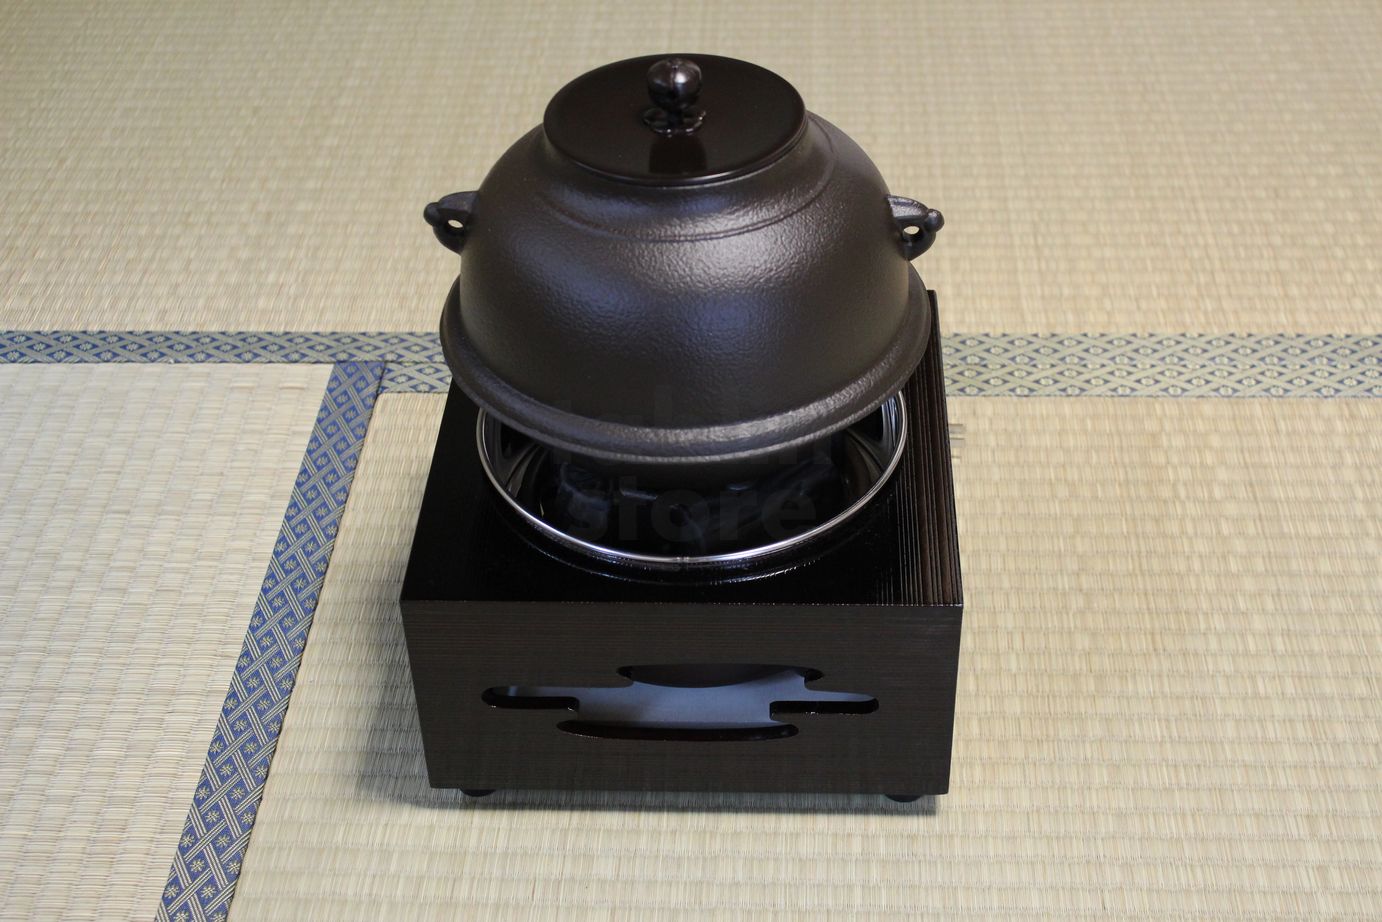 Japanese Electric Heater Iron Tea kettle Teapot Chagama Furo Charcoal, Online Shop